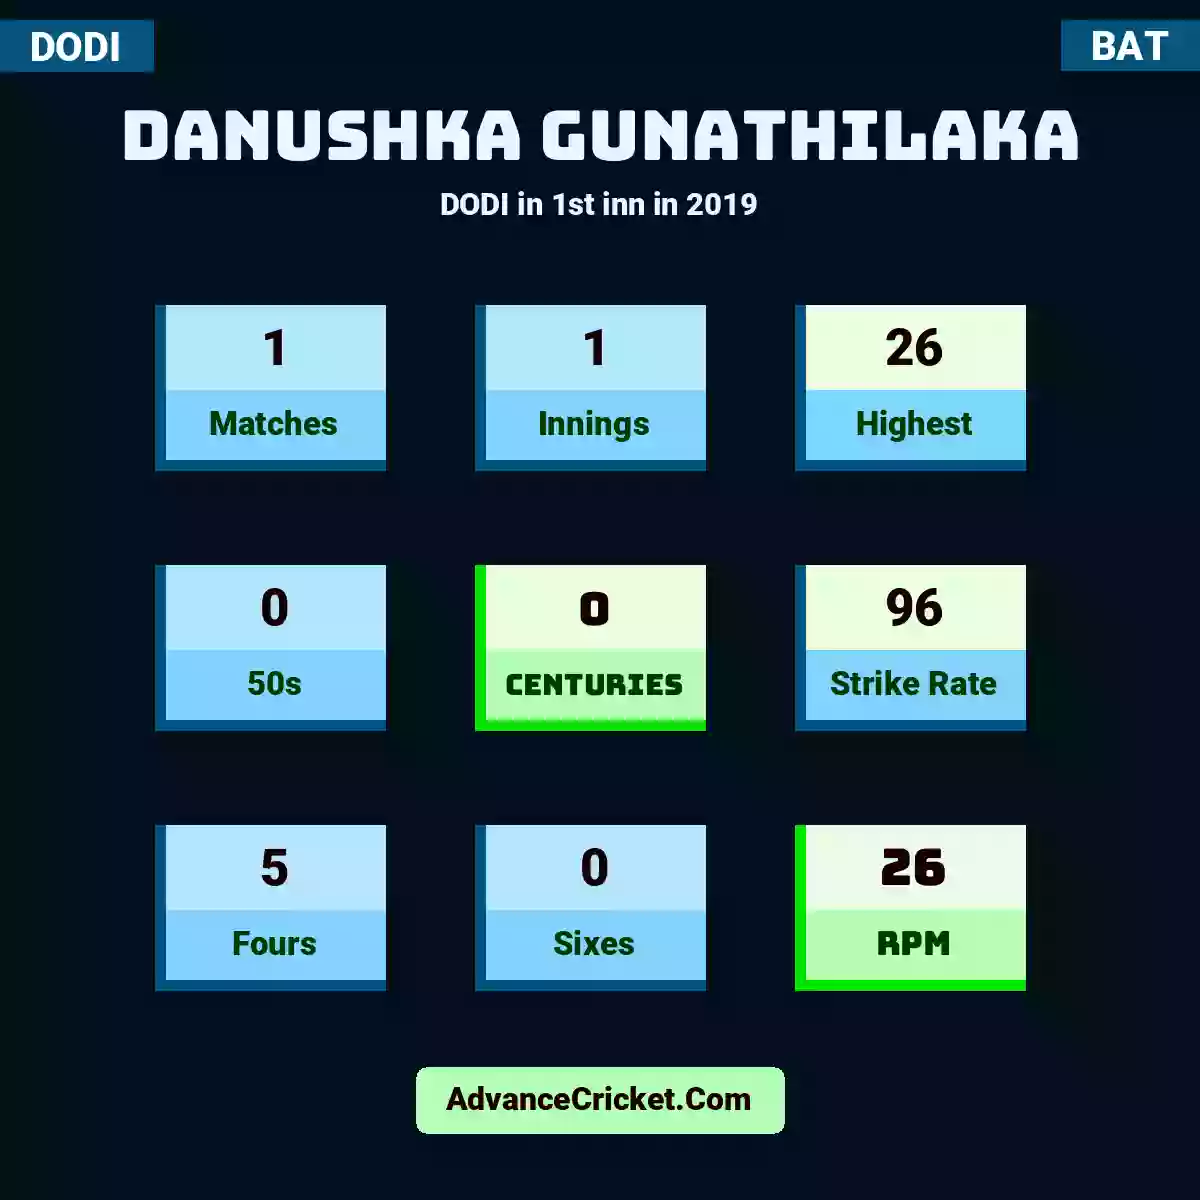 Danushka Gunathilaka DODI  in 1st inn in 2019, Danushka Gunathilaka played 1 matches, scored 26 runs as highest, 0 half-centuries, and 0 centuries, with a strike rate of 96. D.Gunathilaka hit 5 fours and 0 sixes, with an RPM of 26.